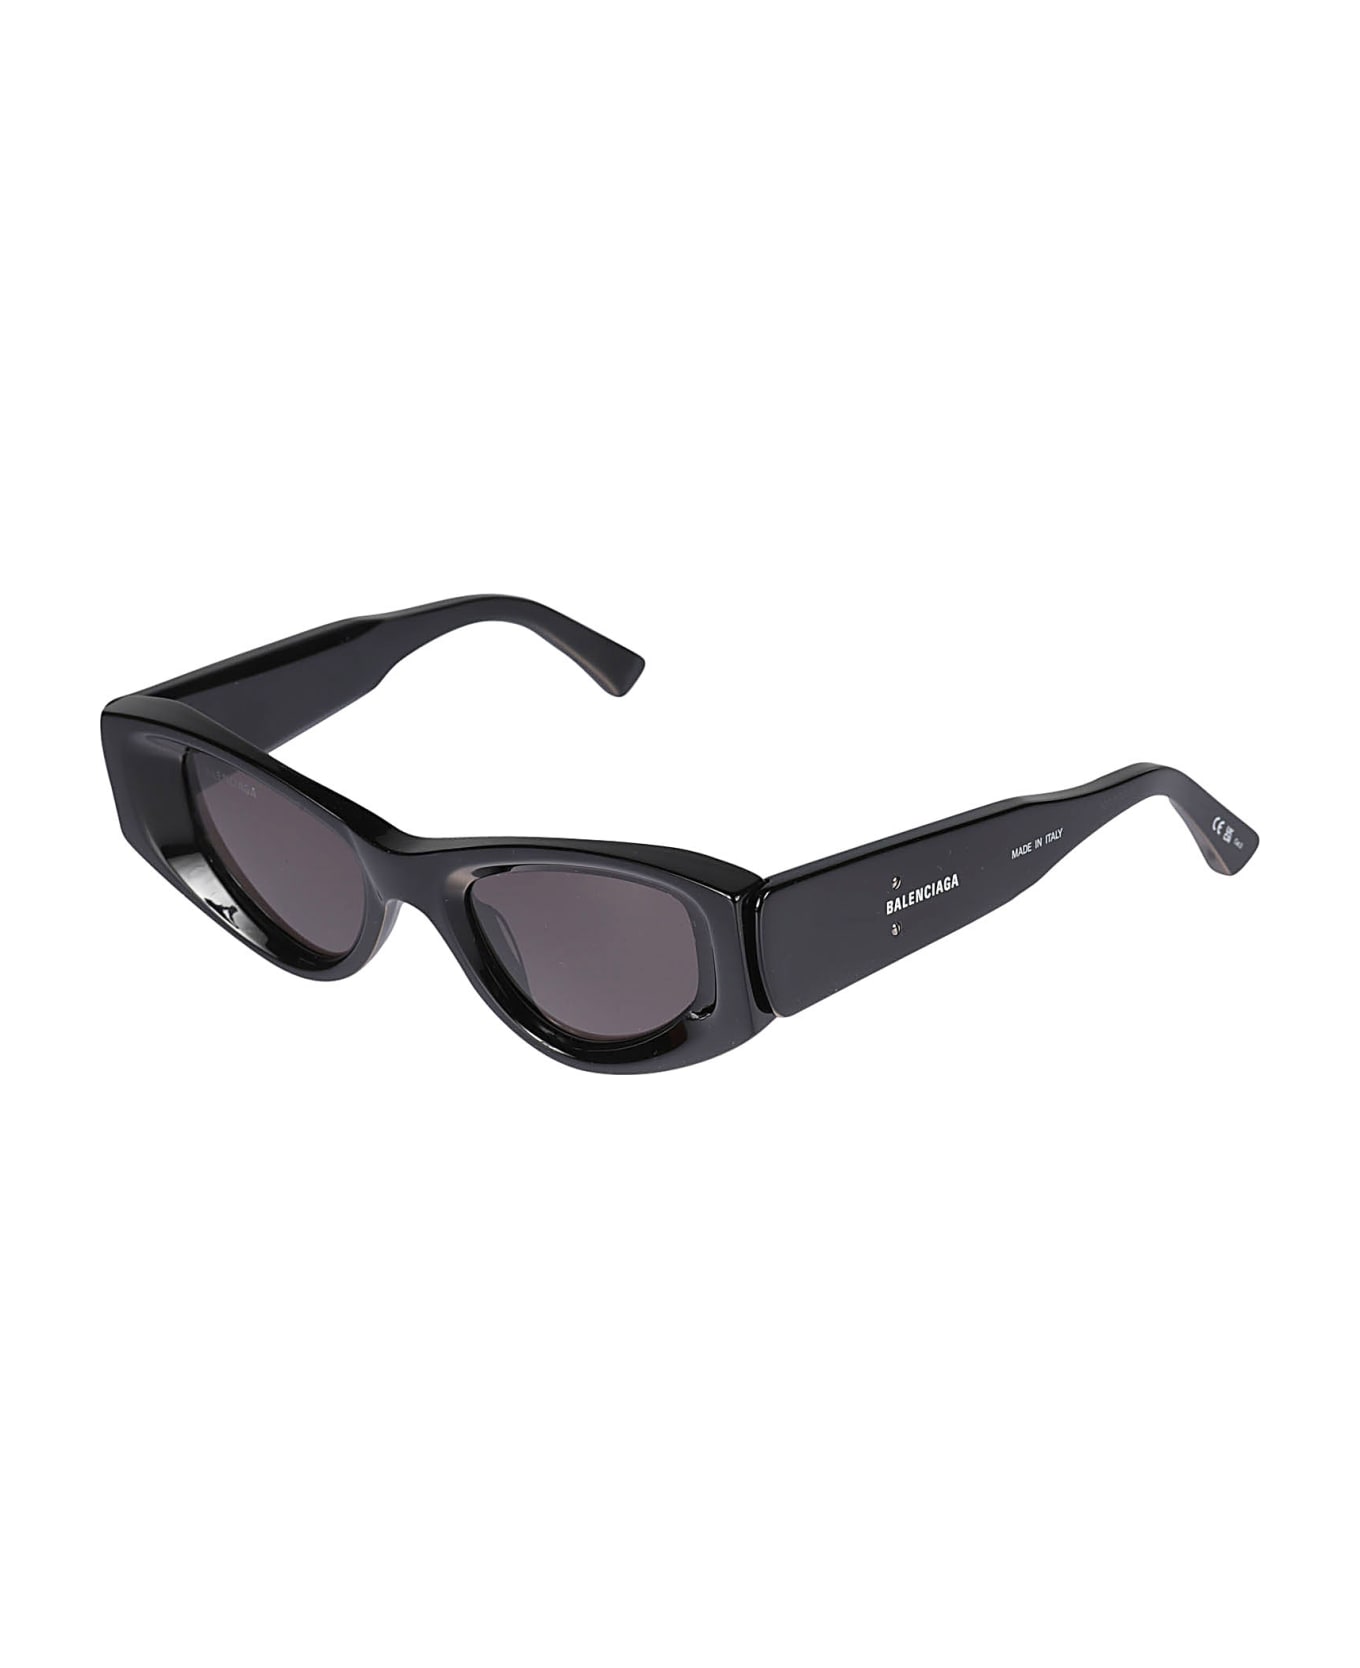 Balenciaga Eyewear Odeon Cat Sunglasses - Nero